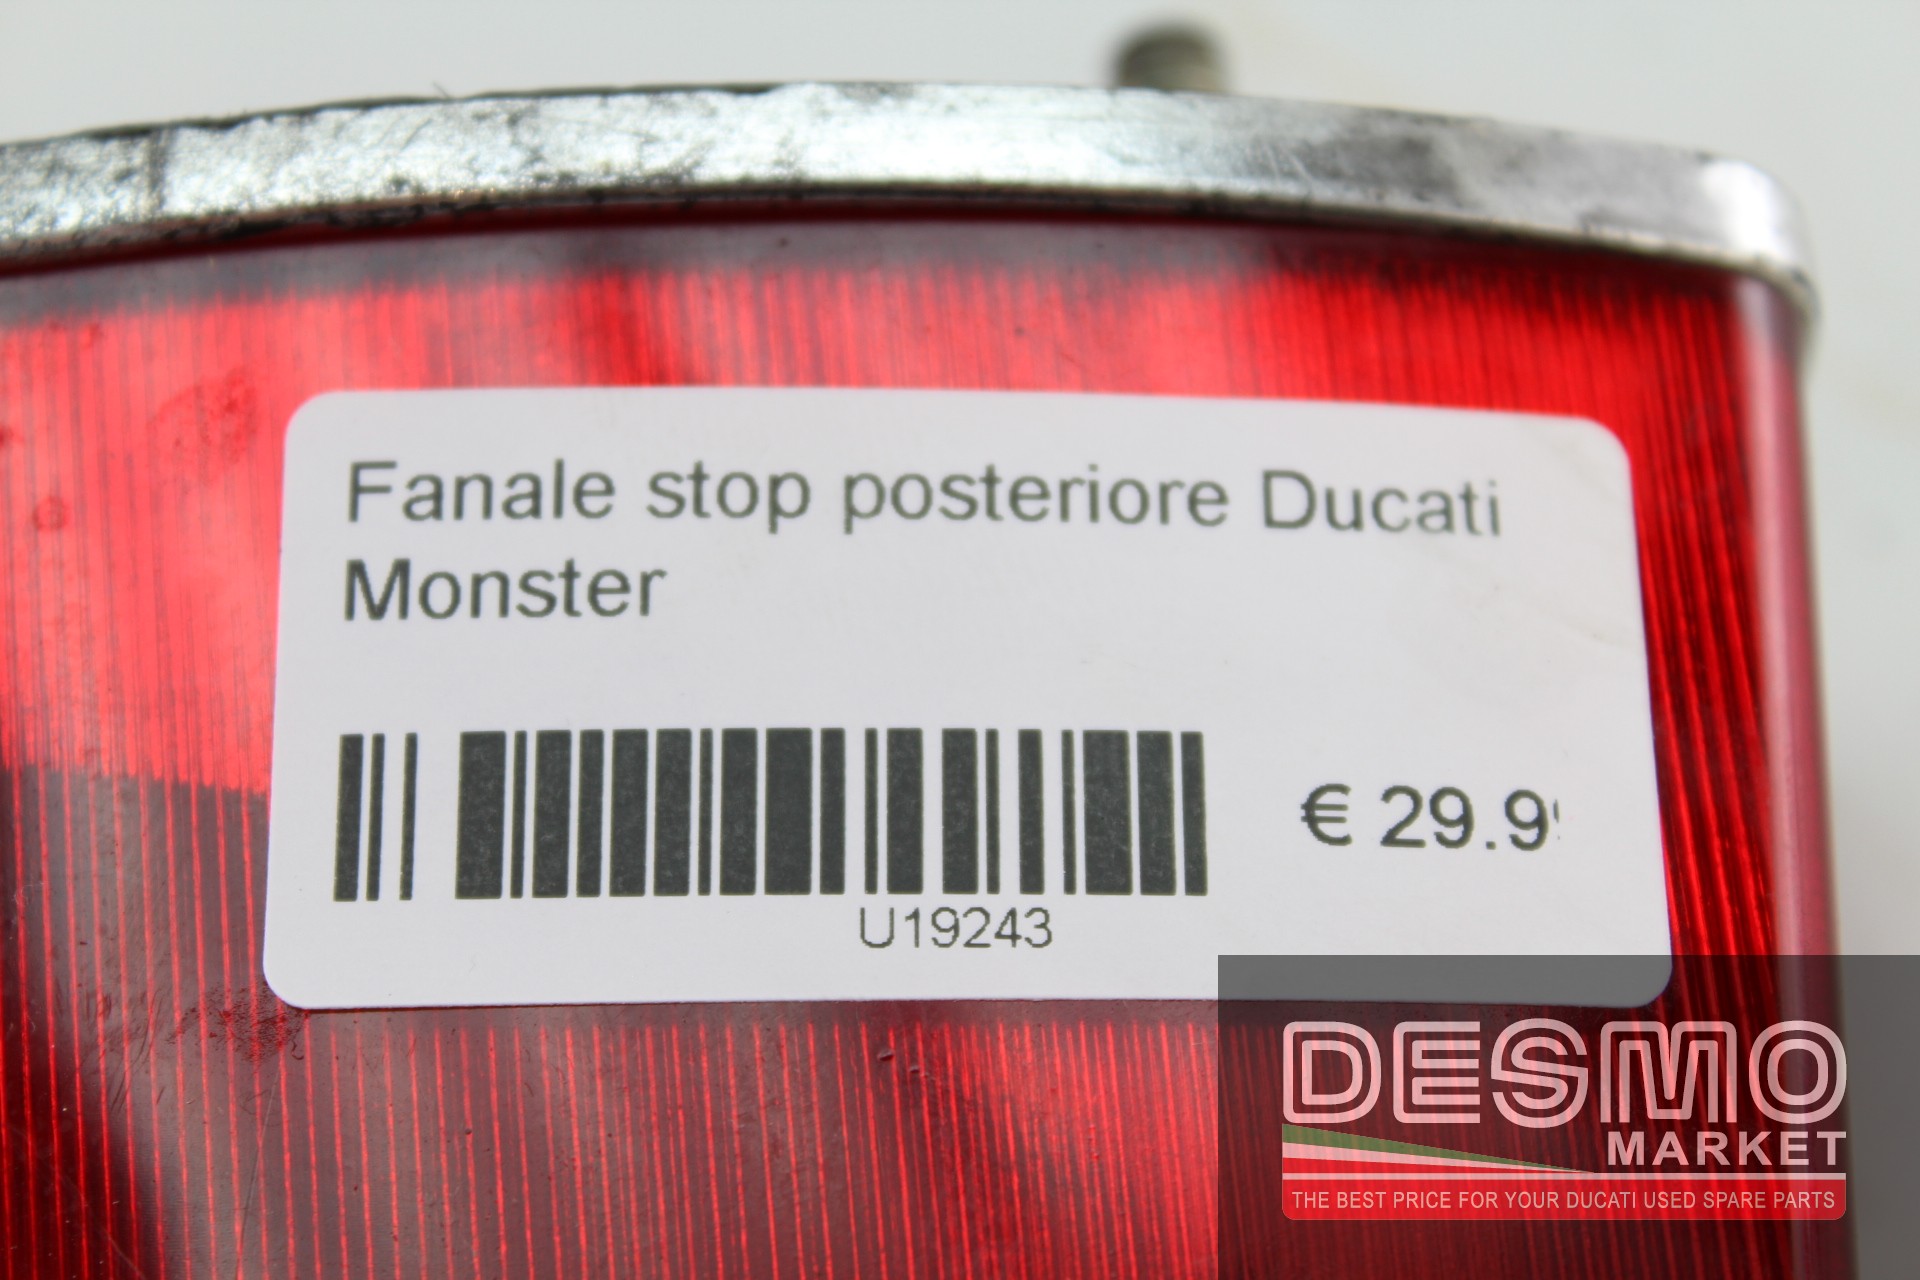 Fanale stop posteriore Ducati Monster